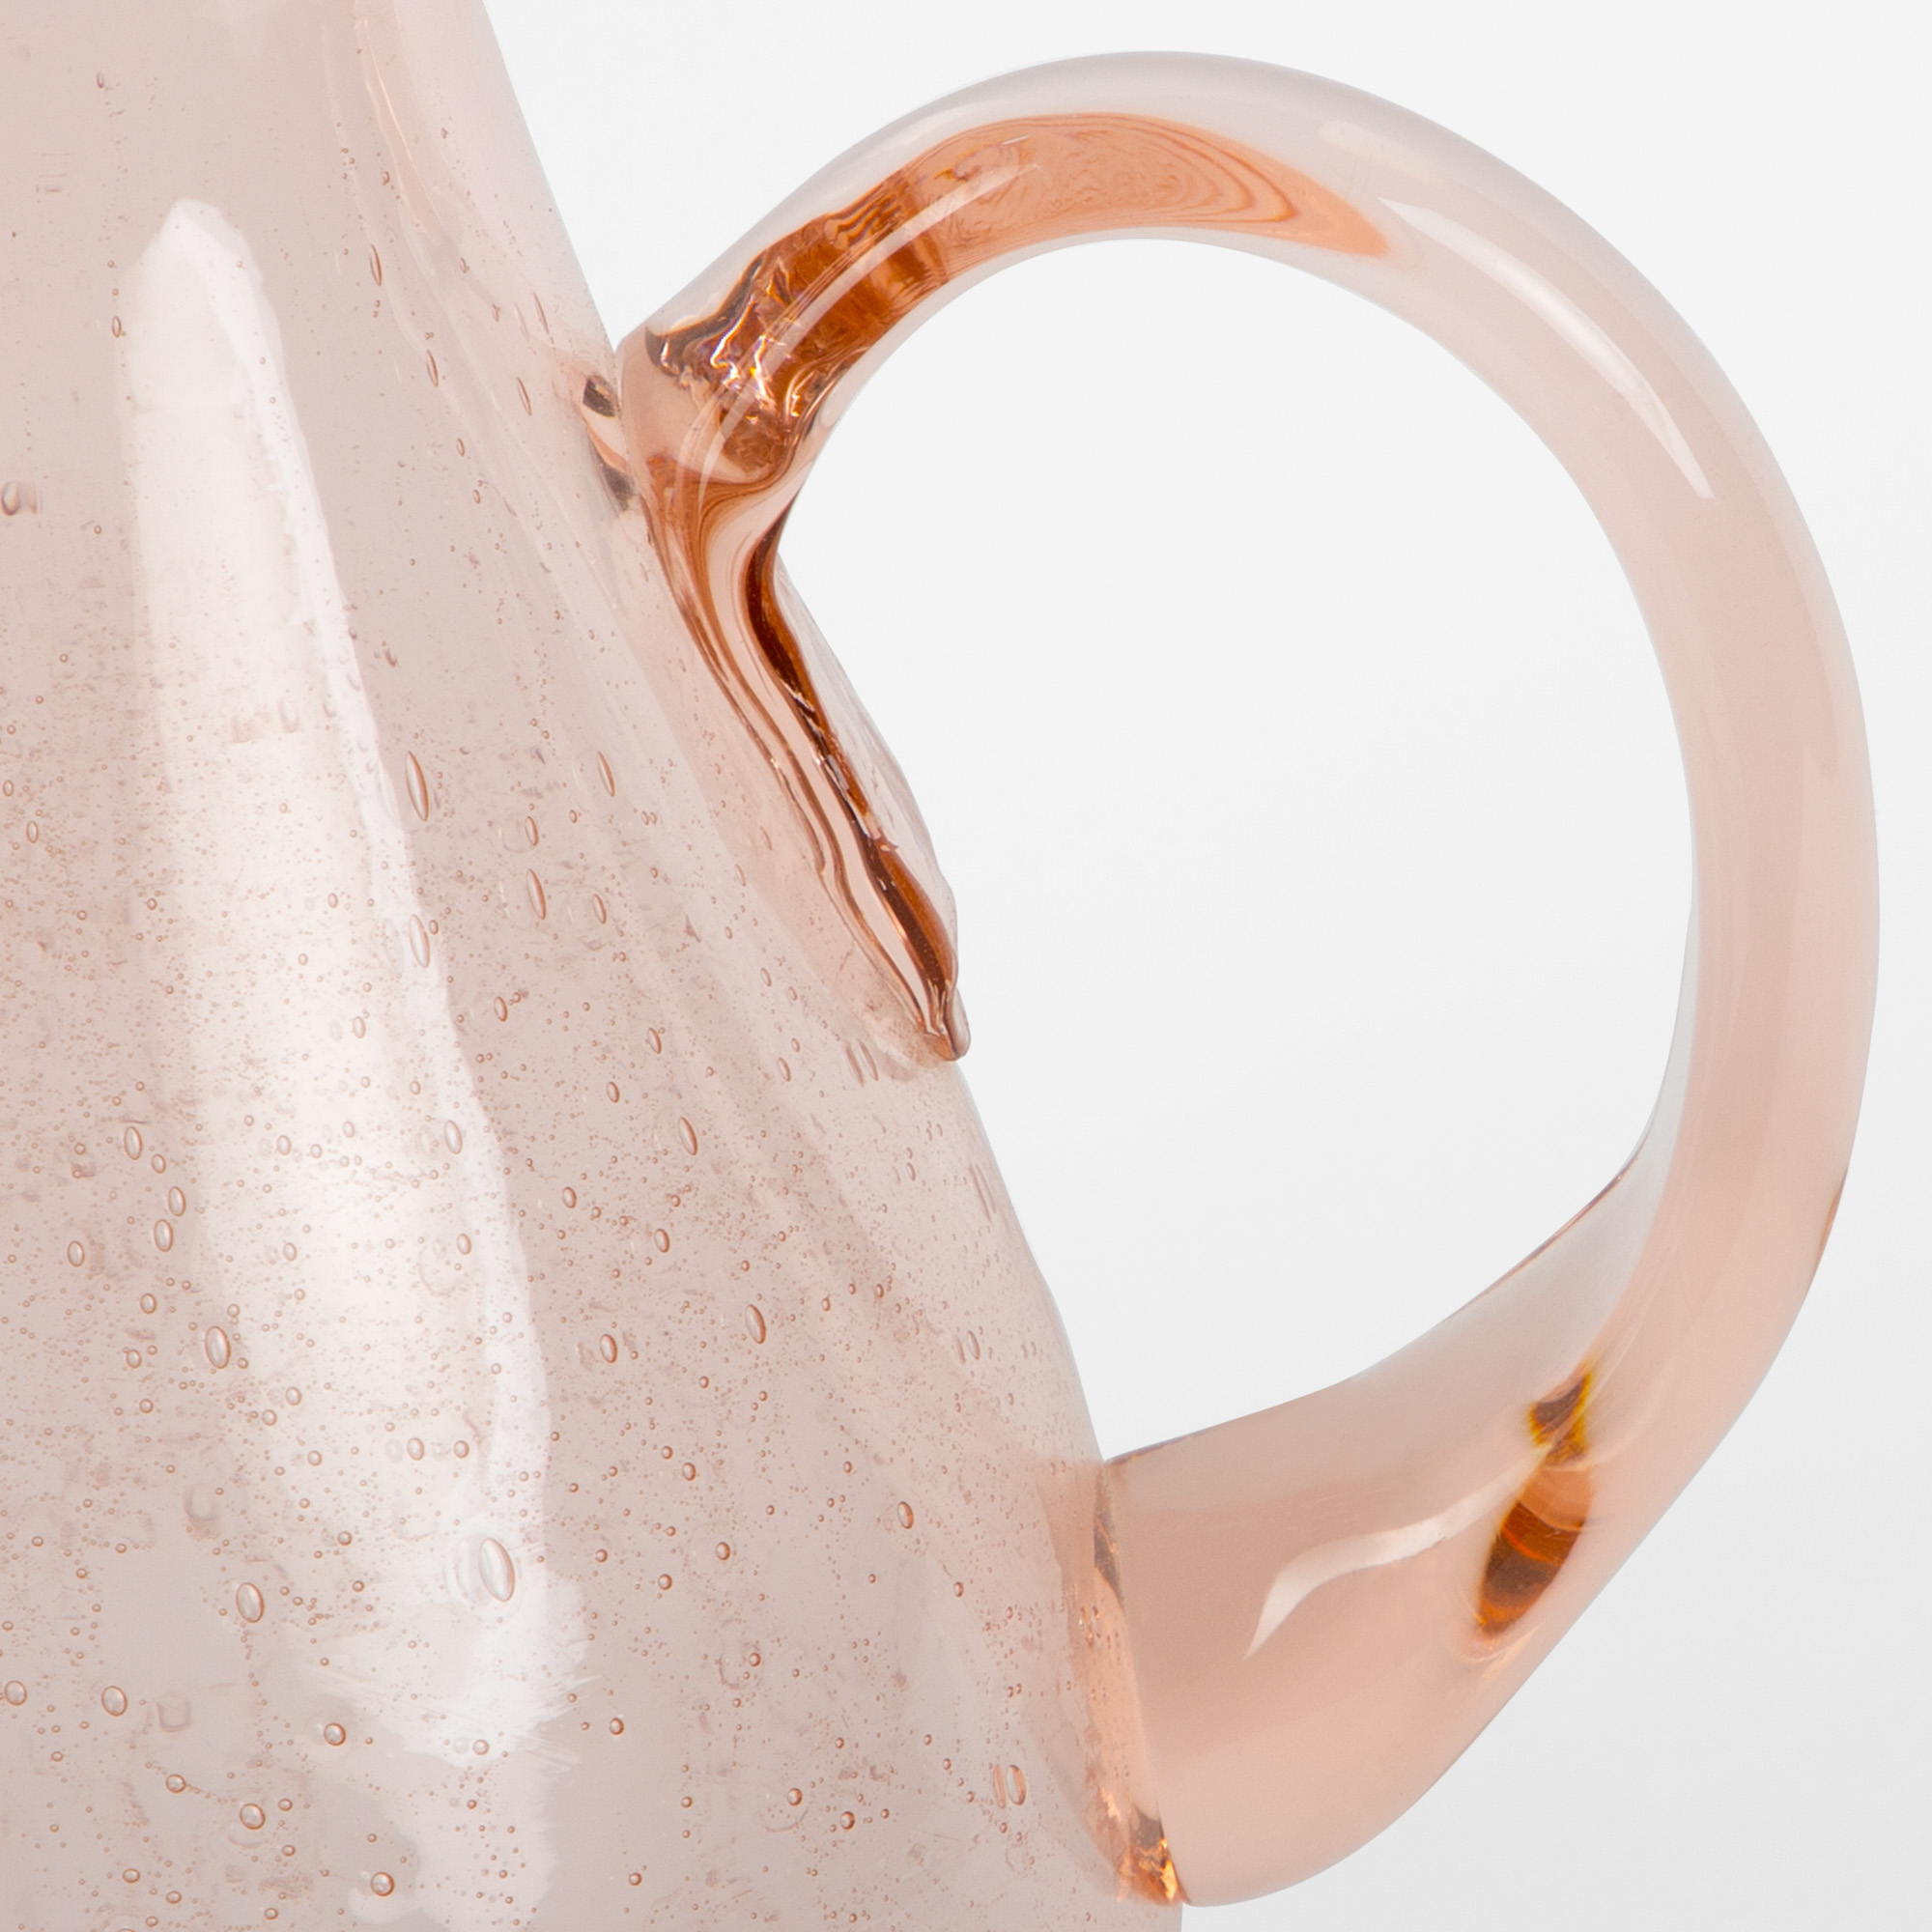 Amphora Glass Jug - Rose Gold